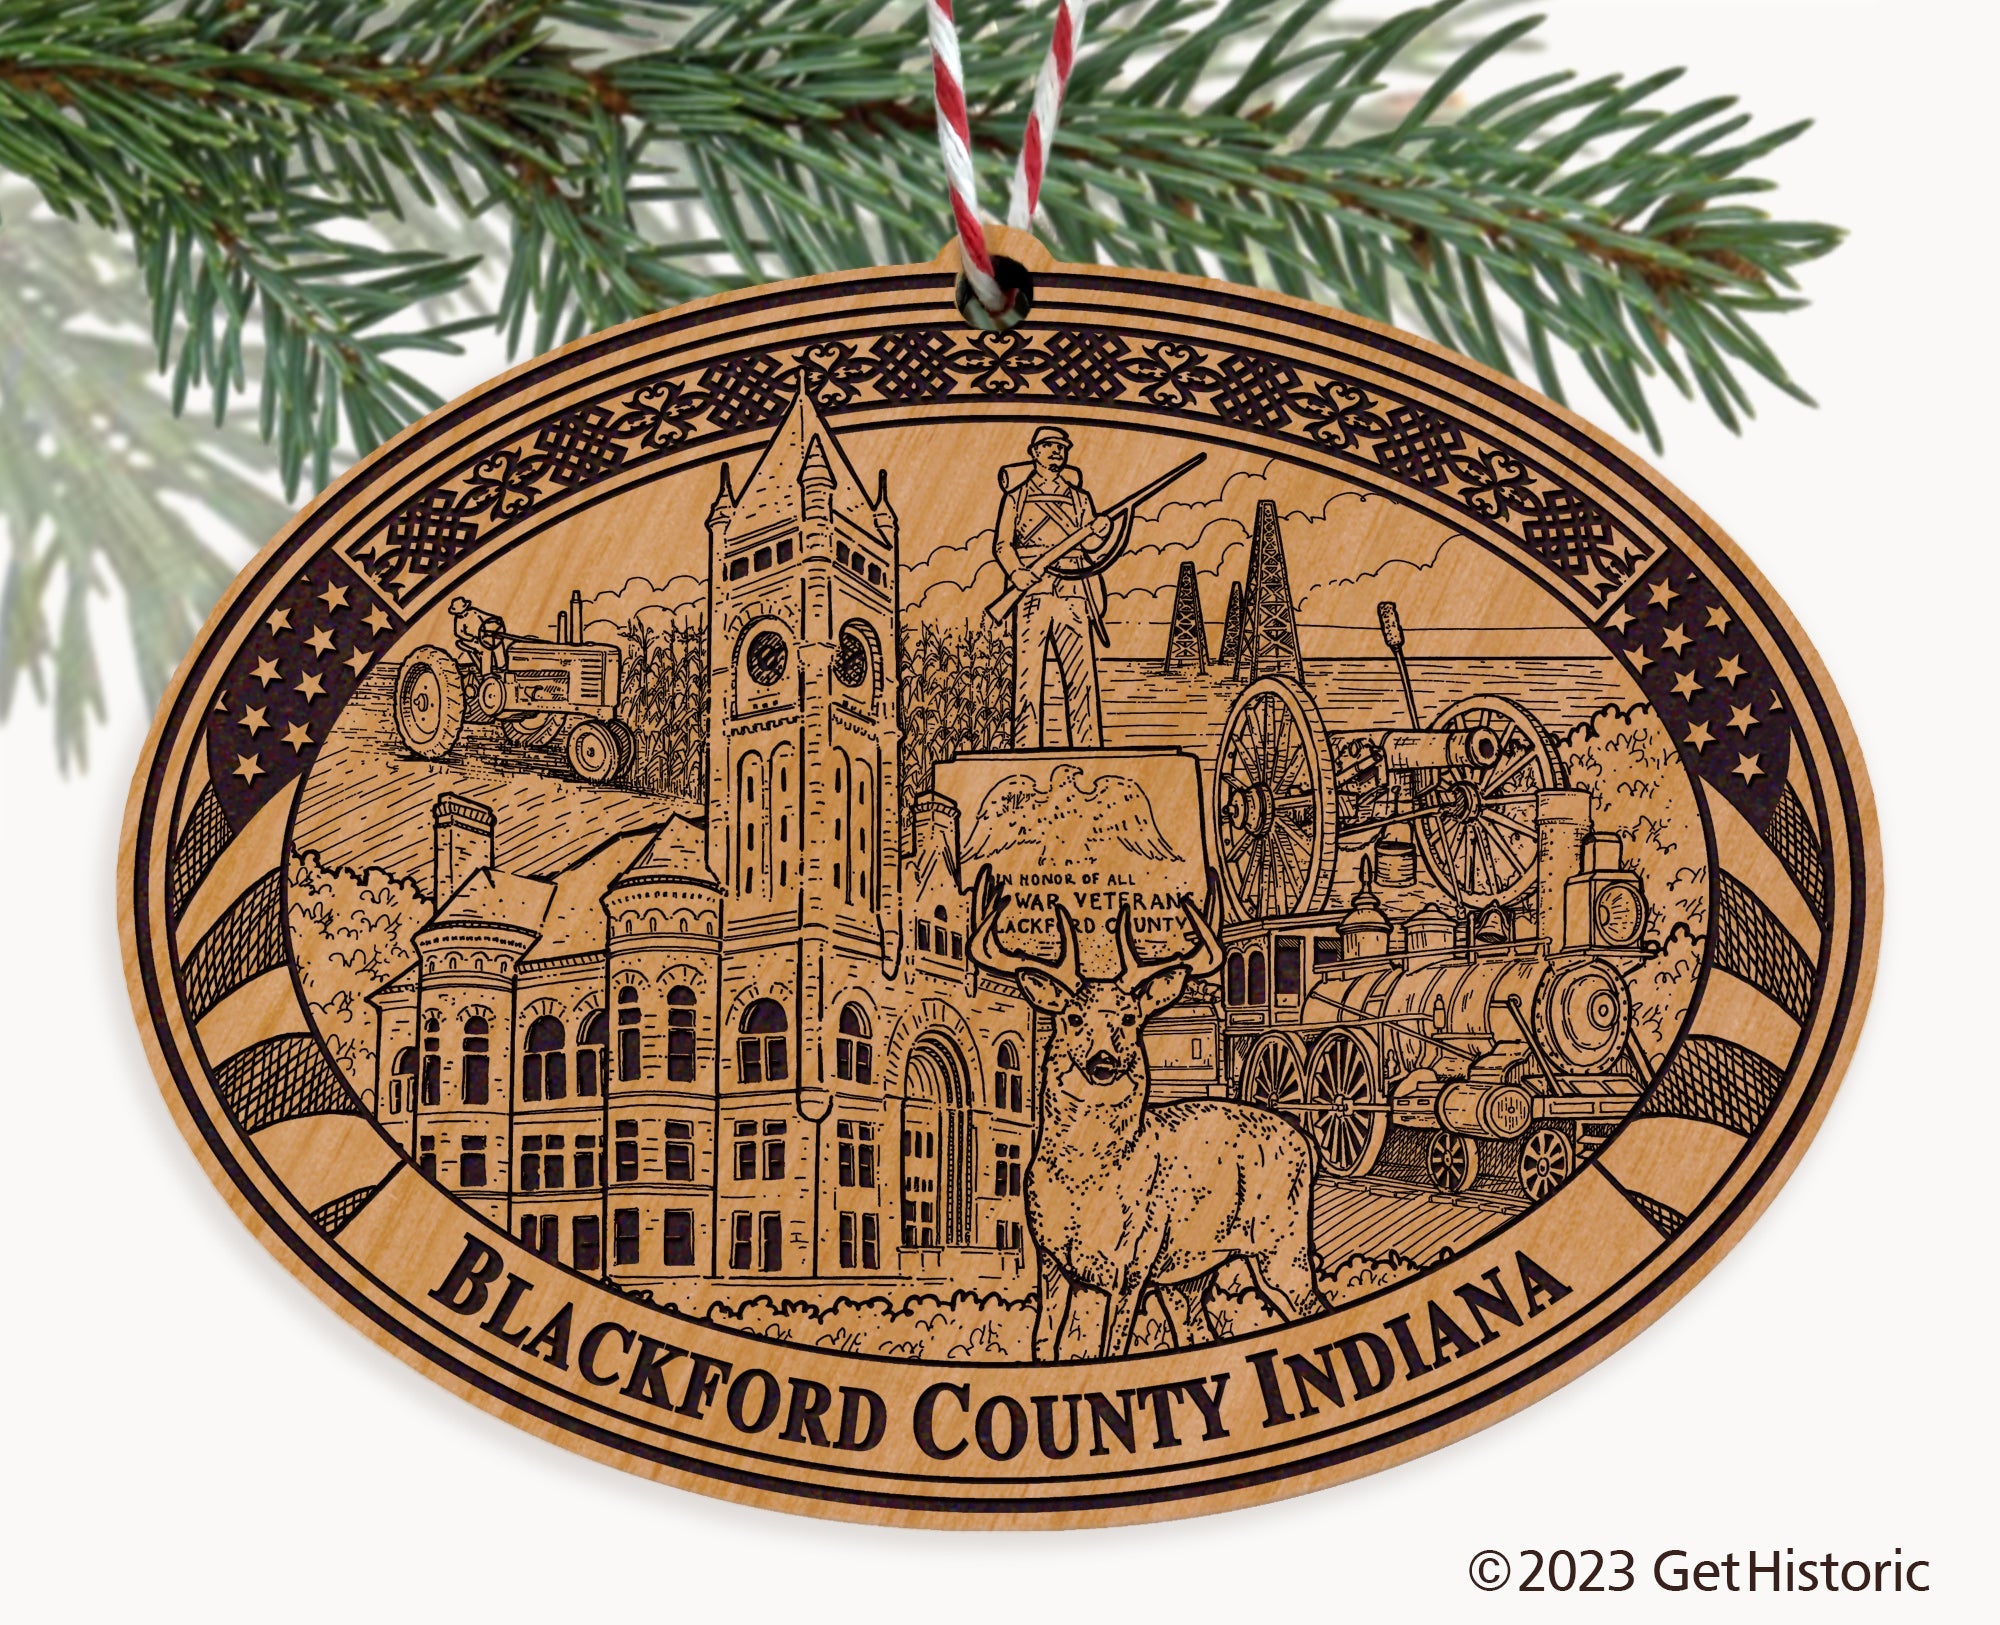 Blackford County Indiana Engraved Natural Ornament